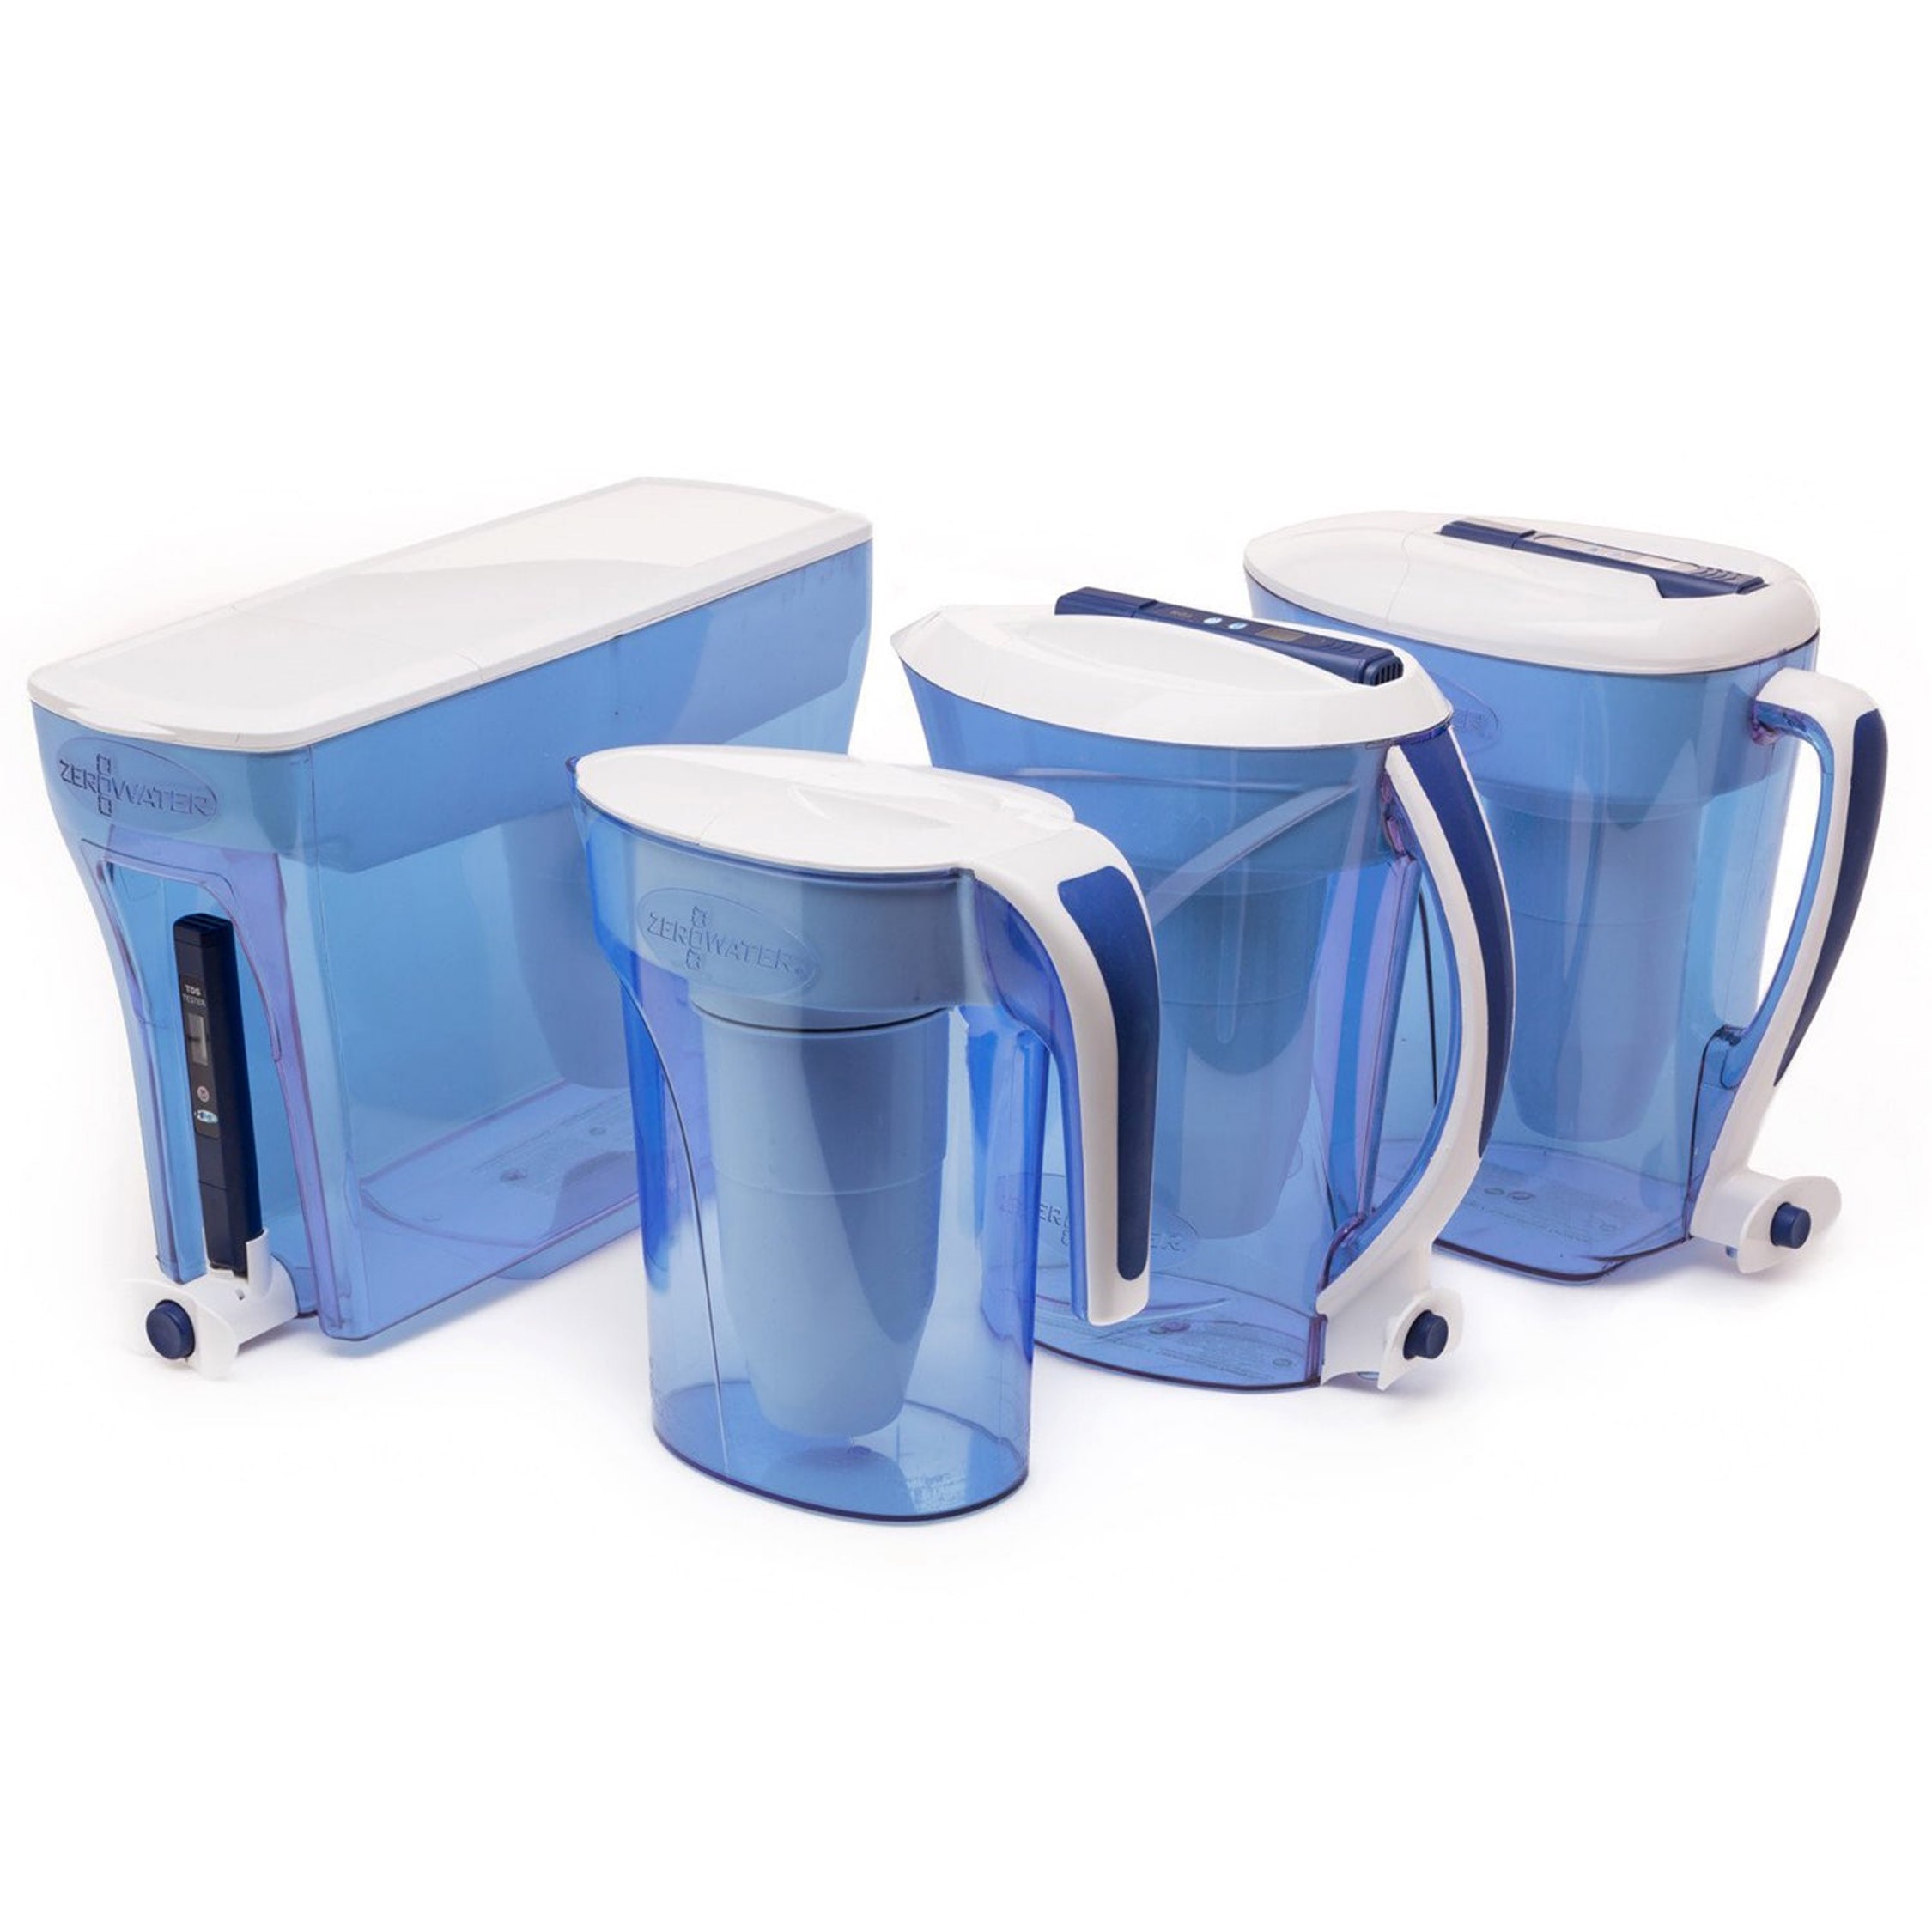 ZeroWater filter jugs range